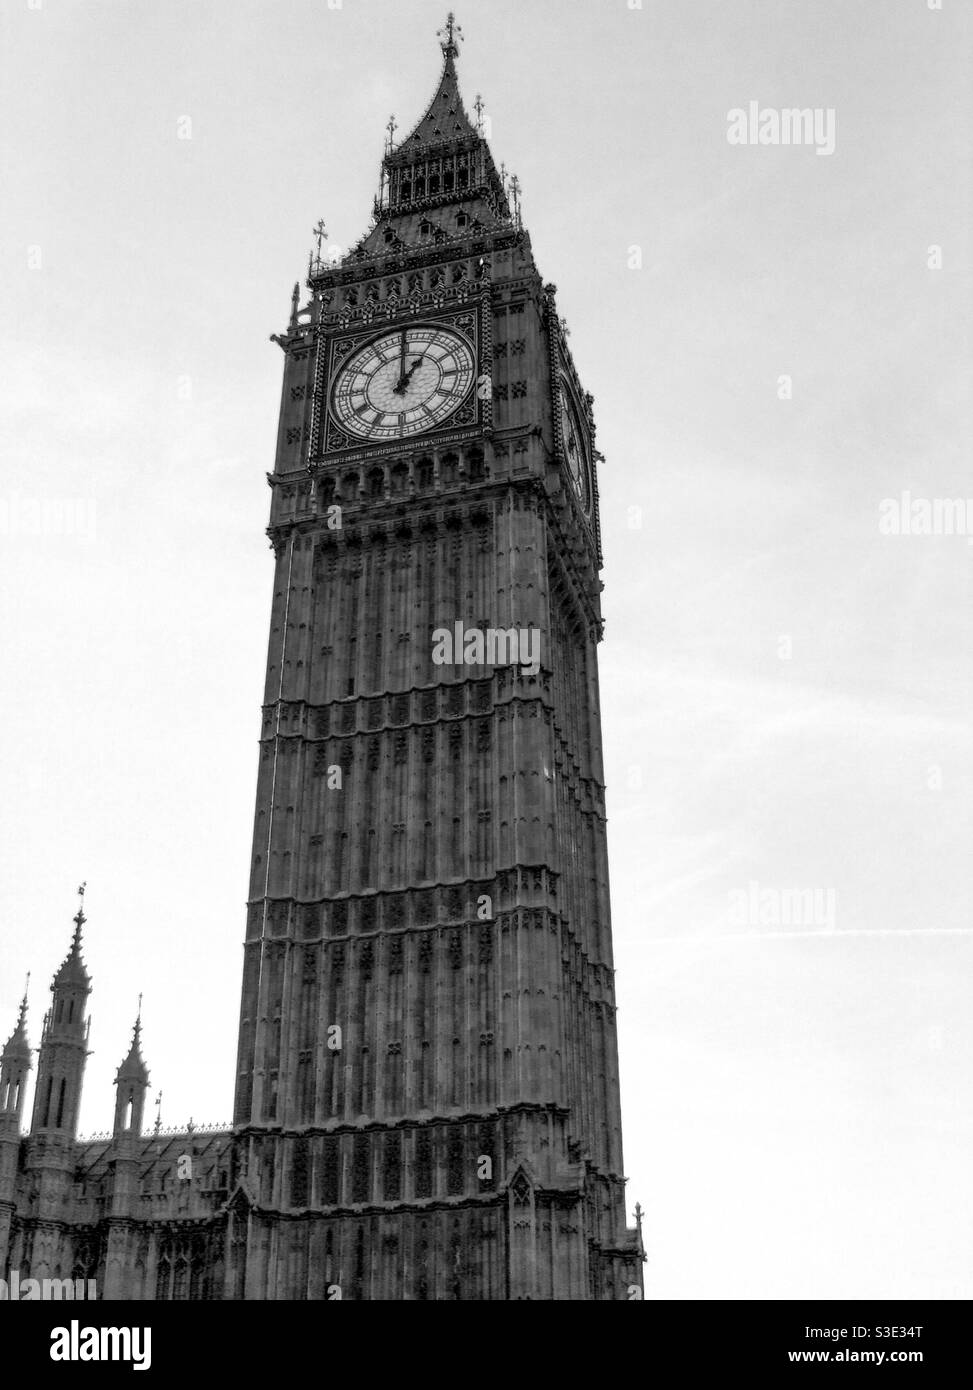 Big Ben clock tower in monochrome Stock Photo